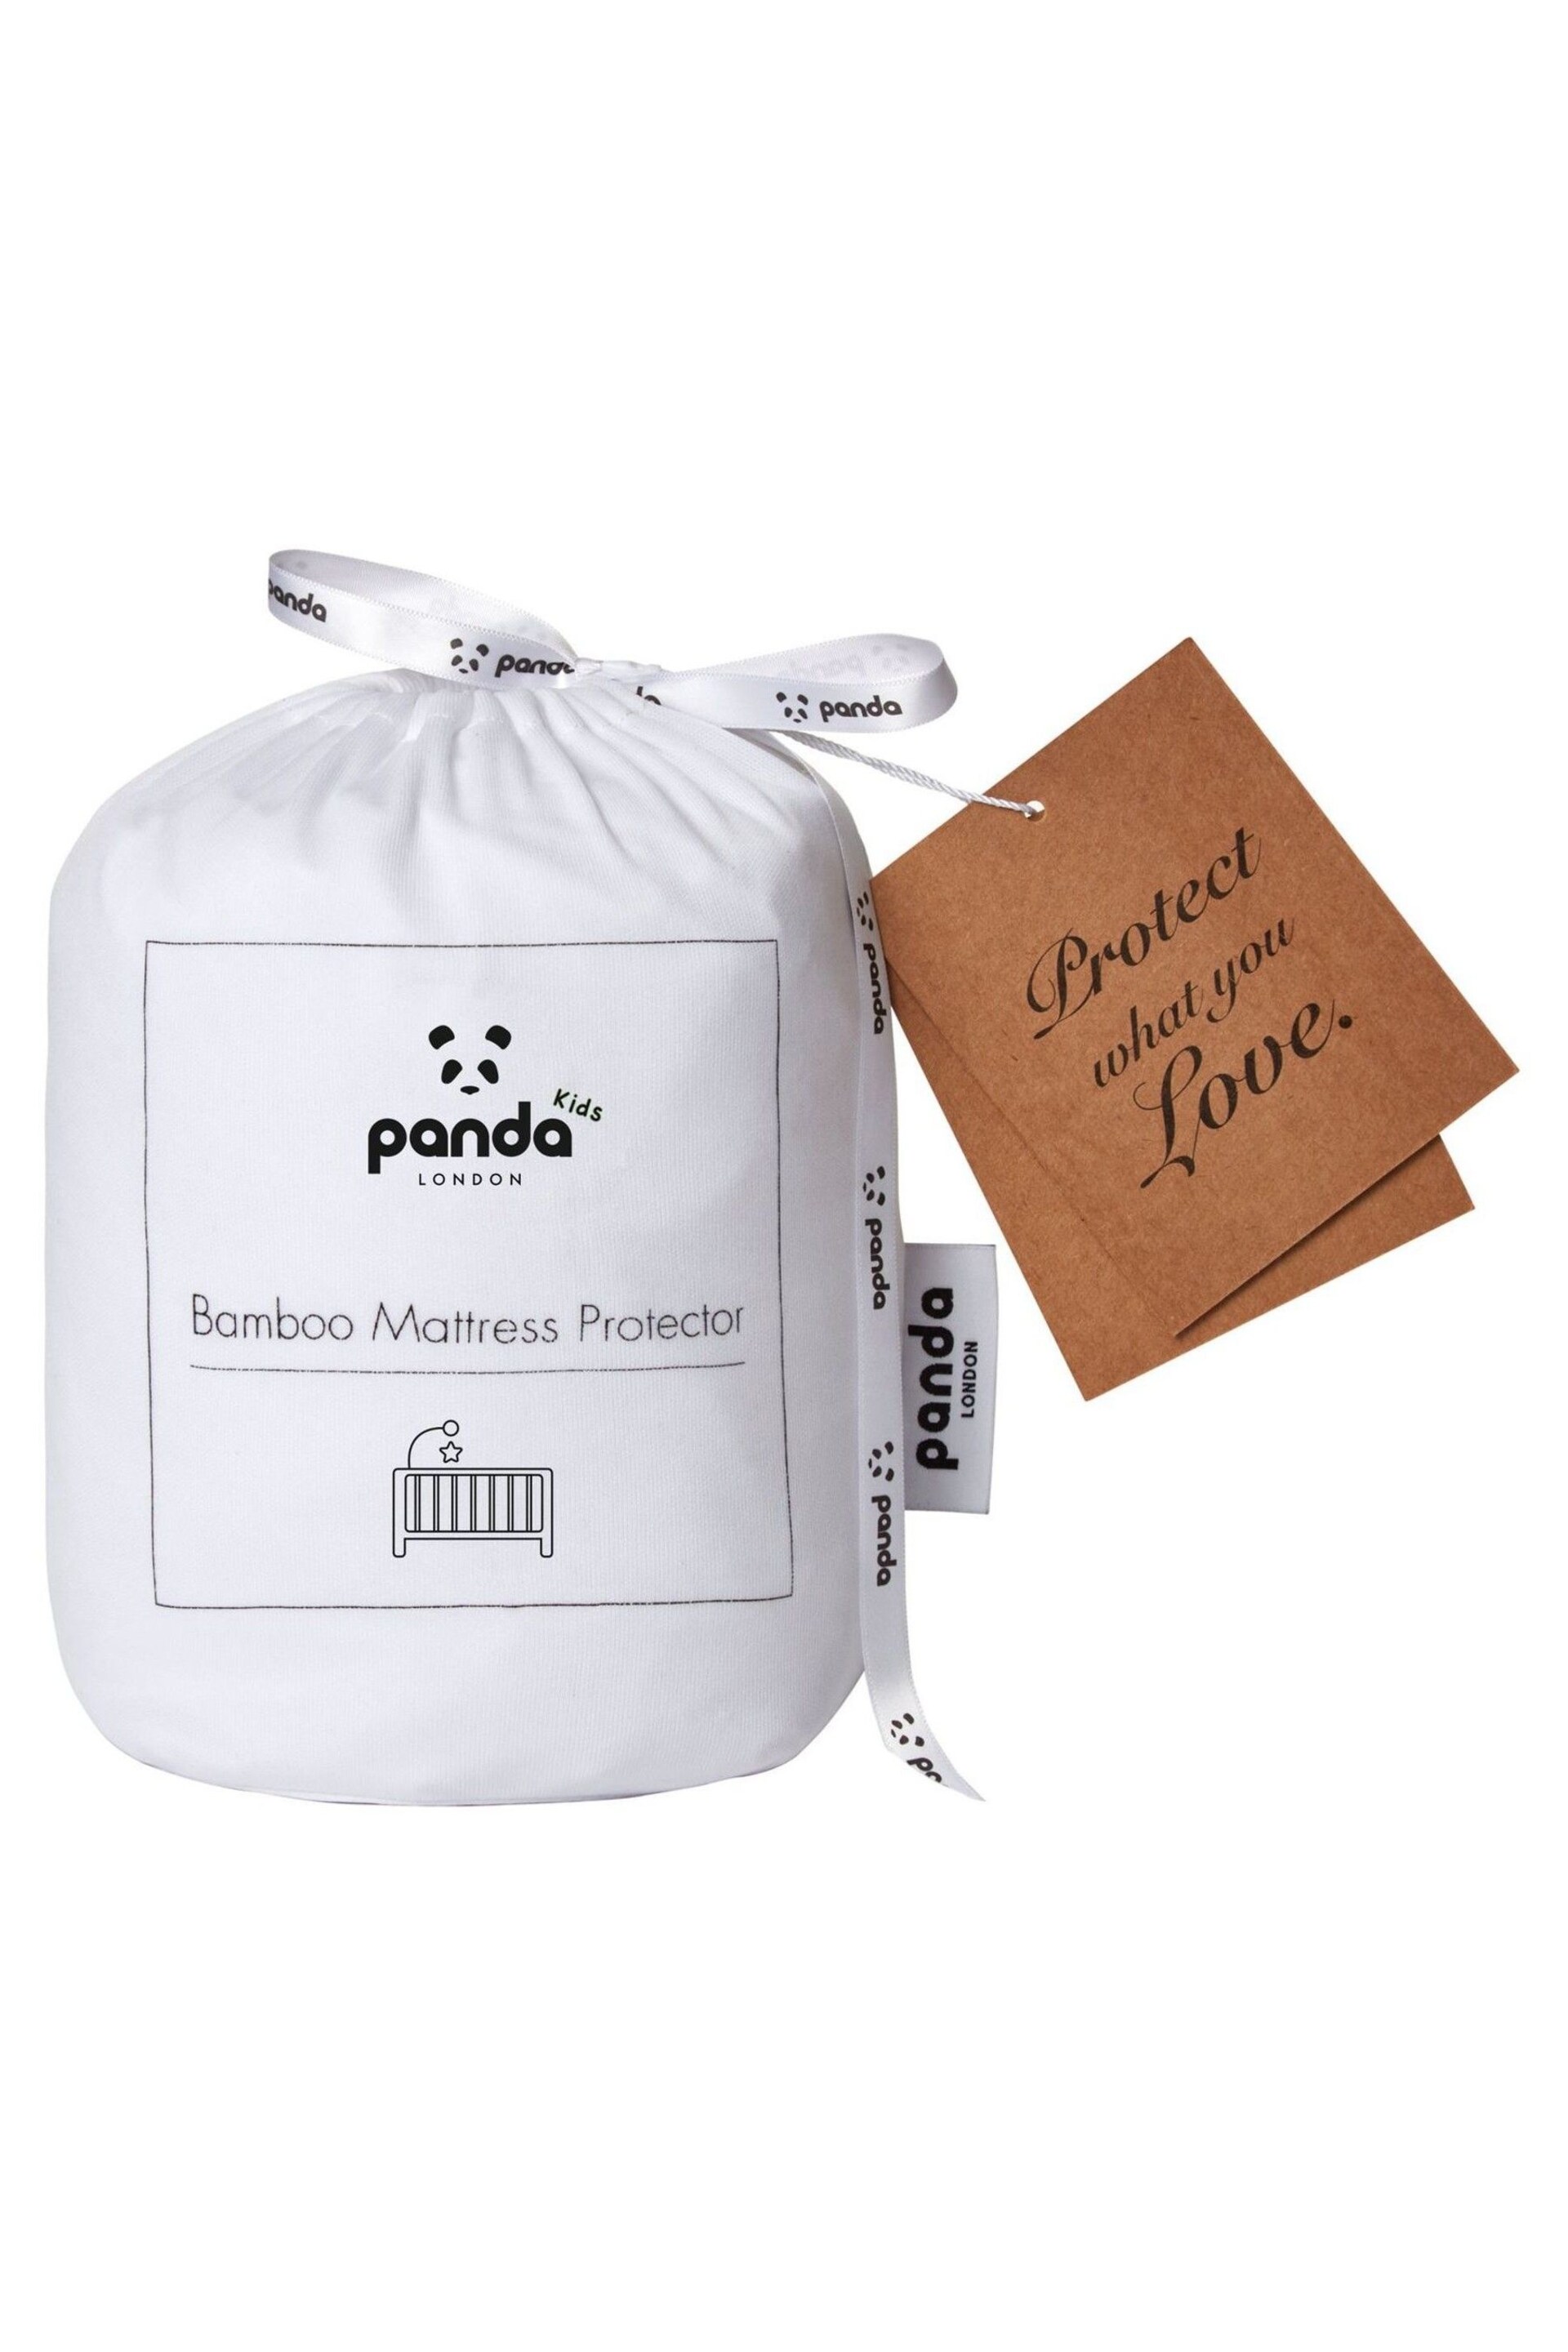 Panda London White Panda Kids Bamboo Cot Mattress Protector - Image 1 of 3